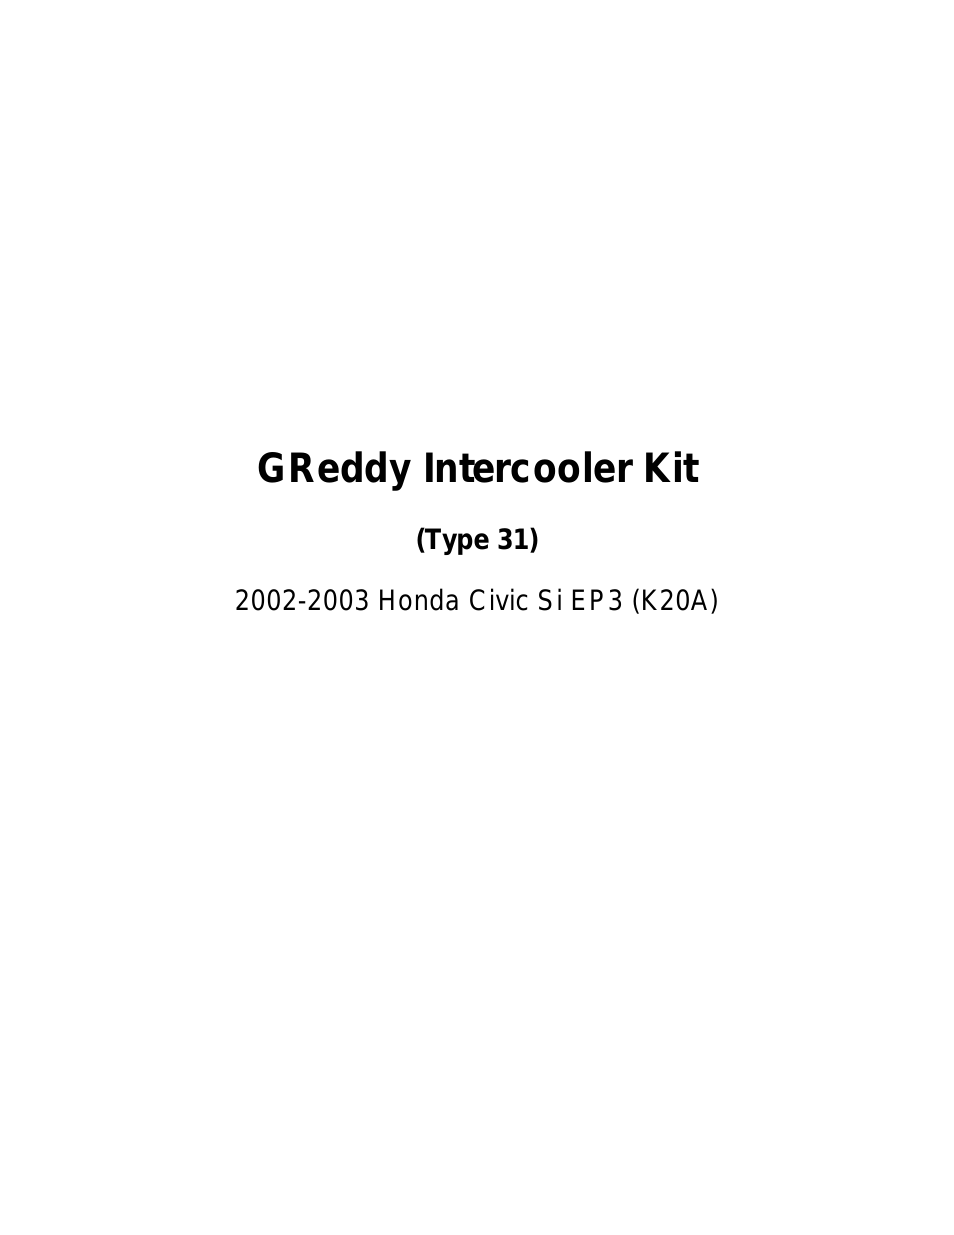 INTERCOOLERS: Honda Civic Si  2002-05 / Type31V